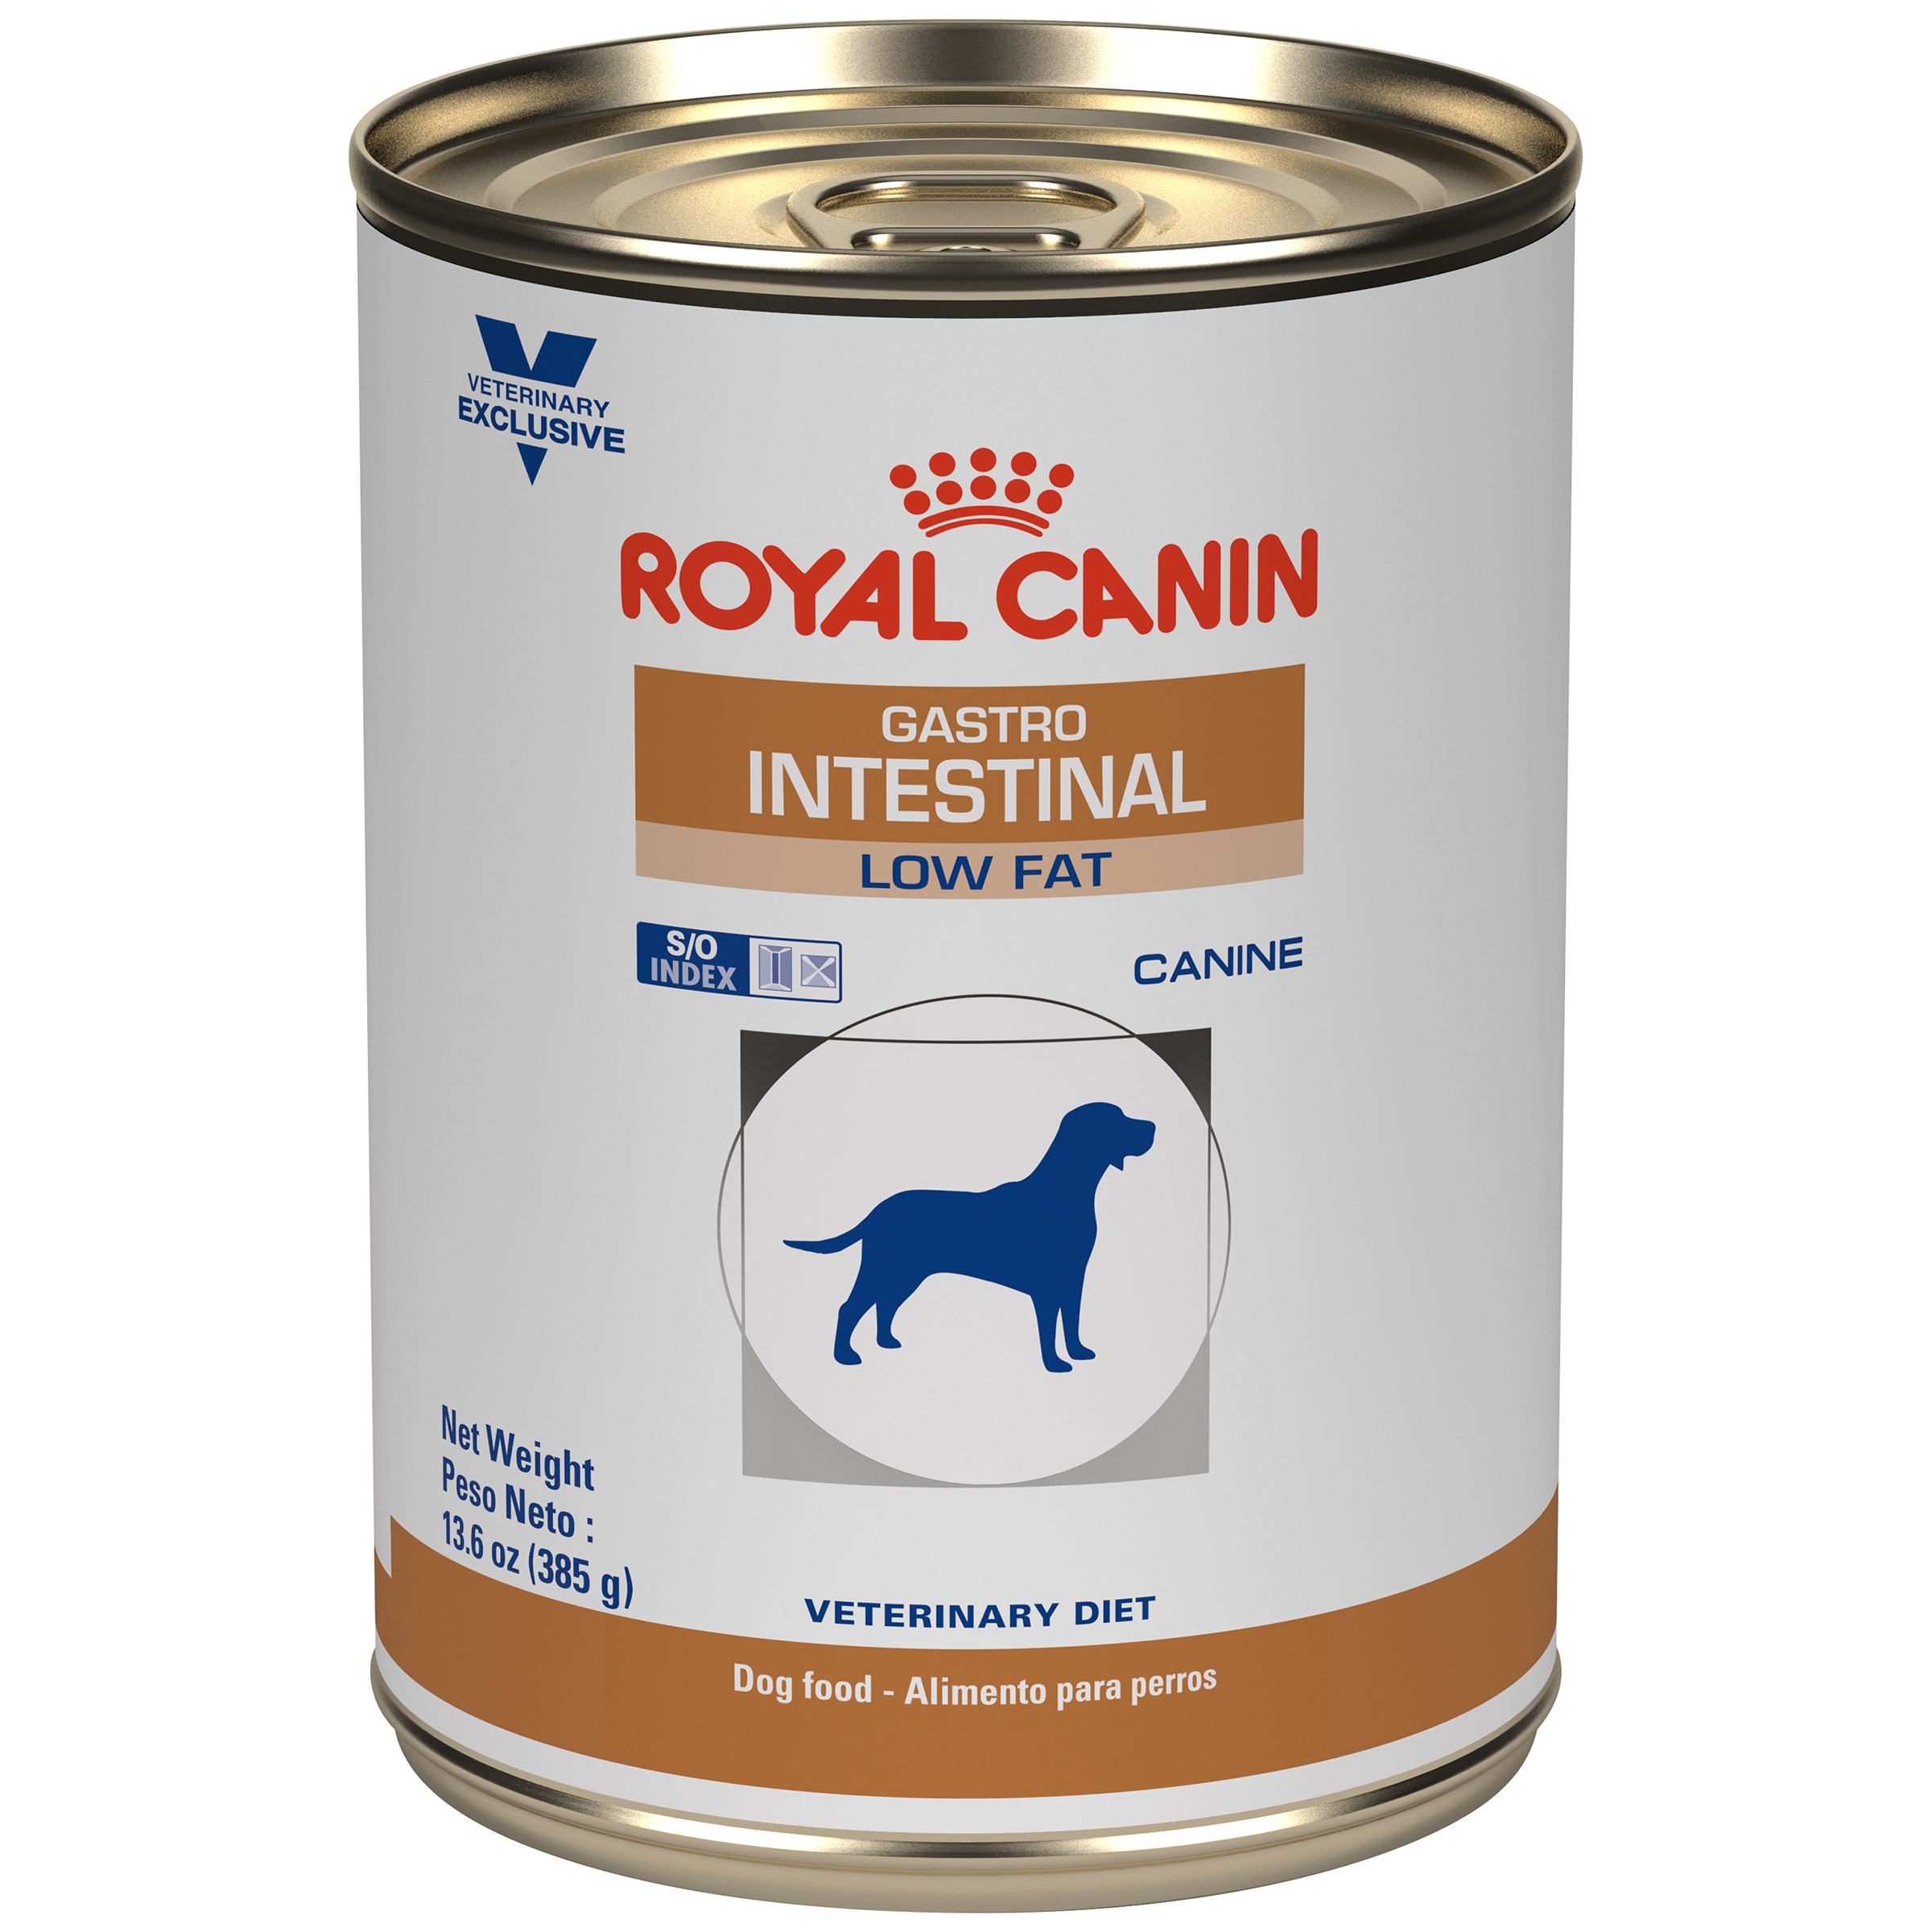 Gastrointestinal корм для собак купить. Гастроинтстинал Лоу фэт Роял Канин. Royal Canin гастро Интестинал для собак. Роял Канин гастро консервы для собак. Royal Canin Gastro intestinal для собак консервы.